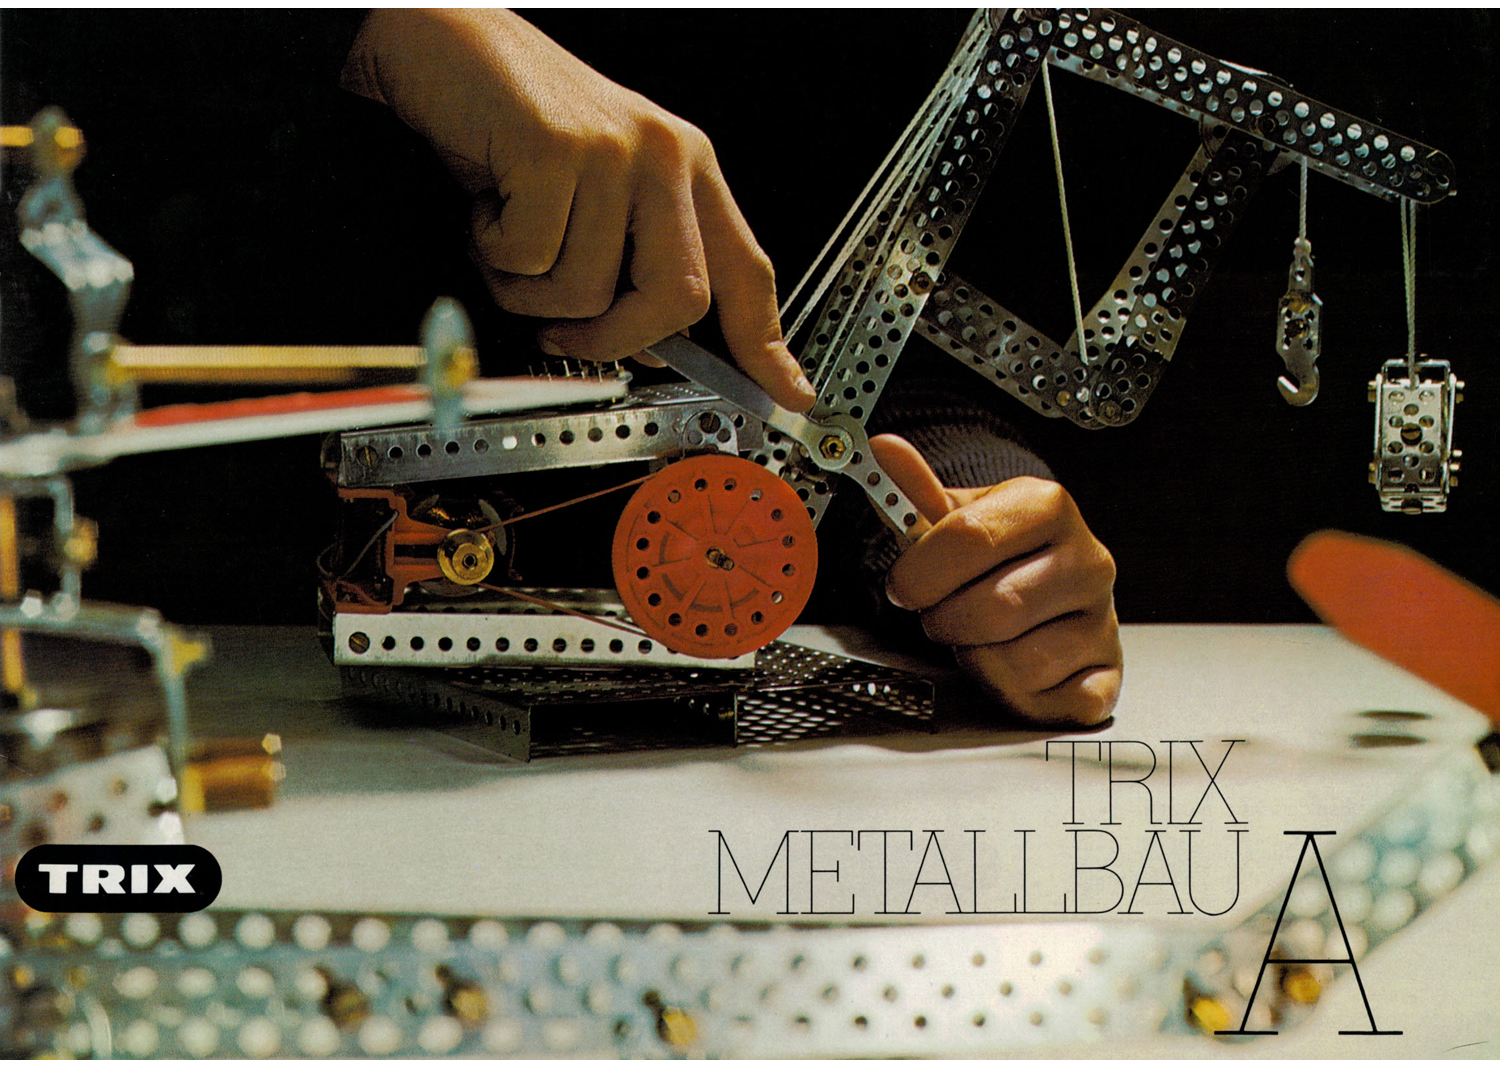 Trix Metallbaukasten A 1977